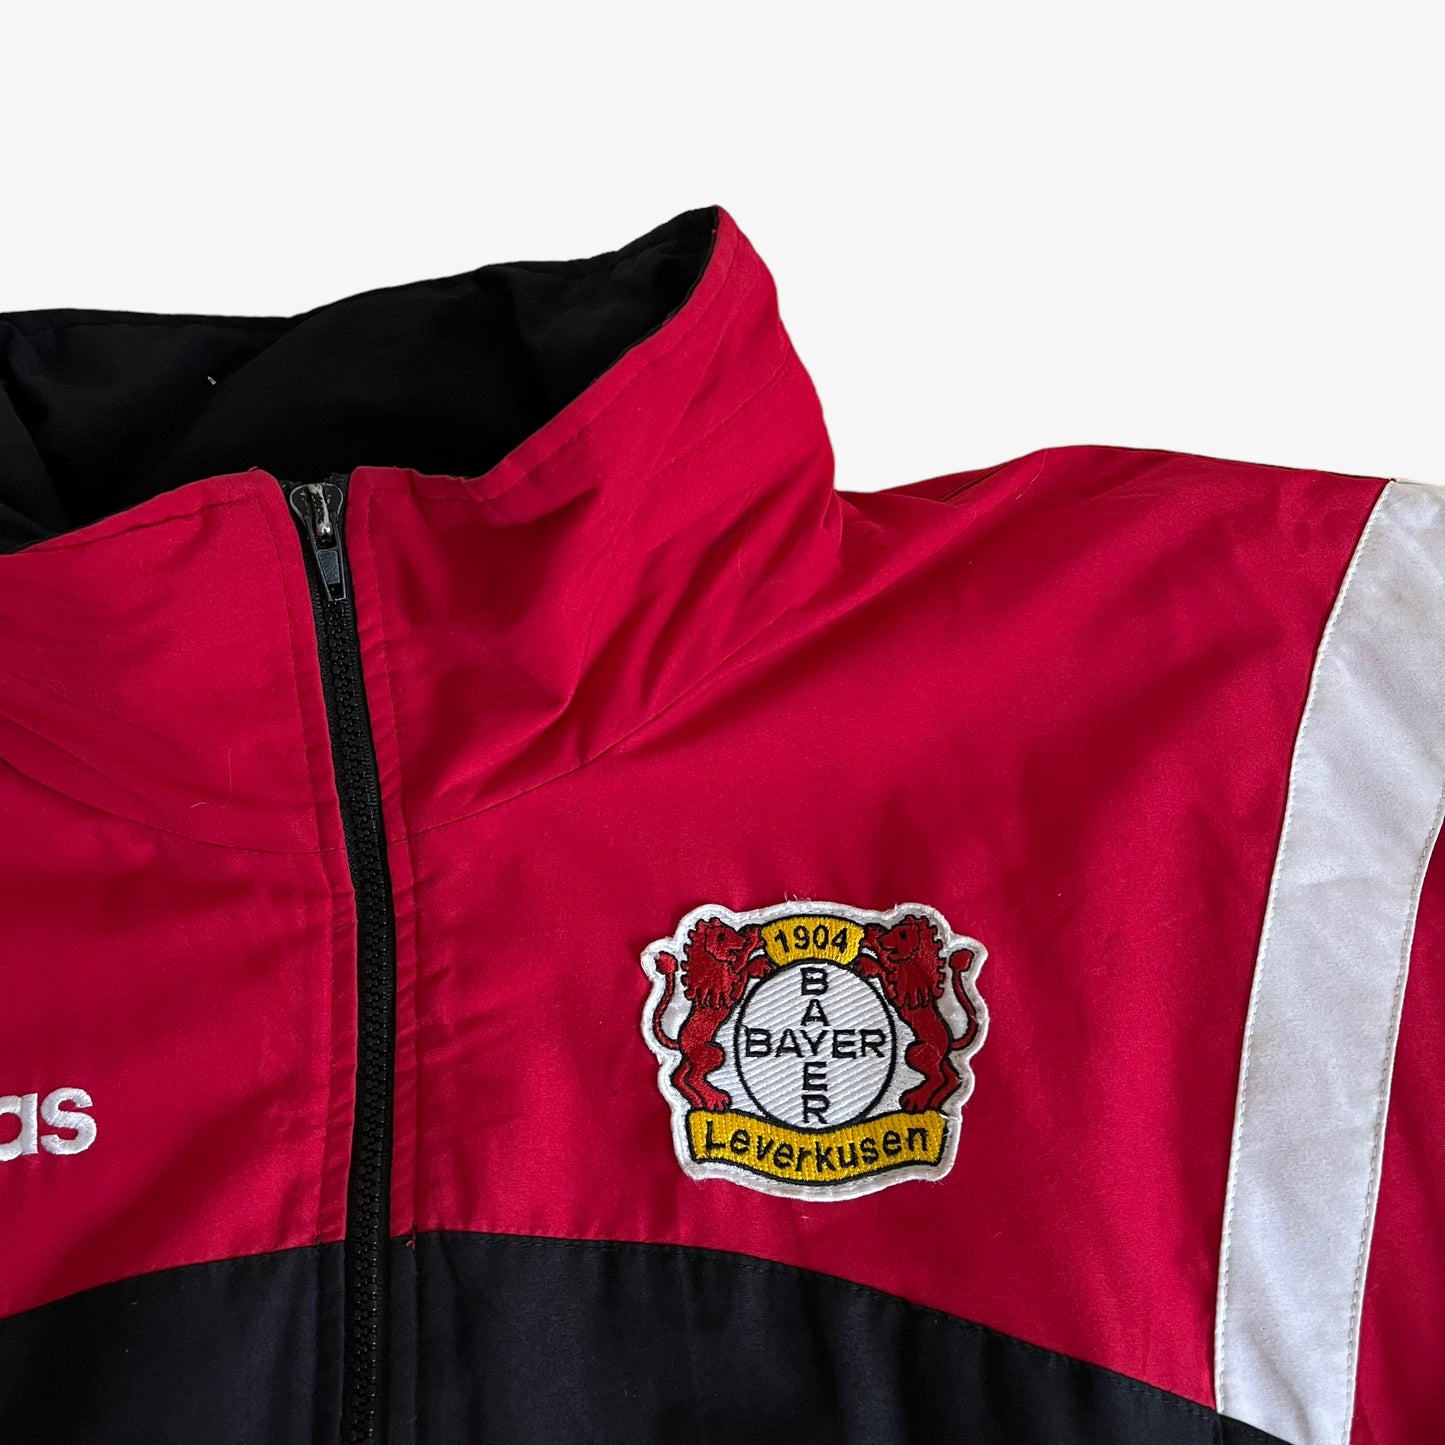 Vintage 90s Adidas Bayern 04 Leverkusen Football Club Coat Jacket Badge - Casspios Dream